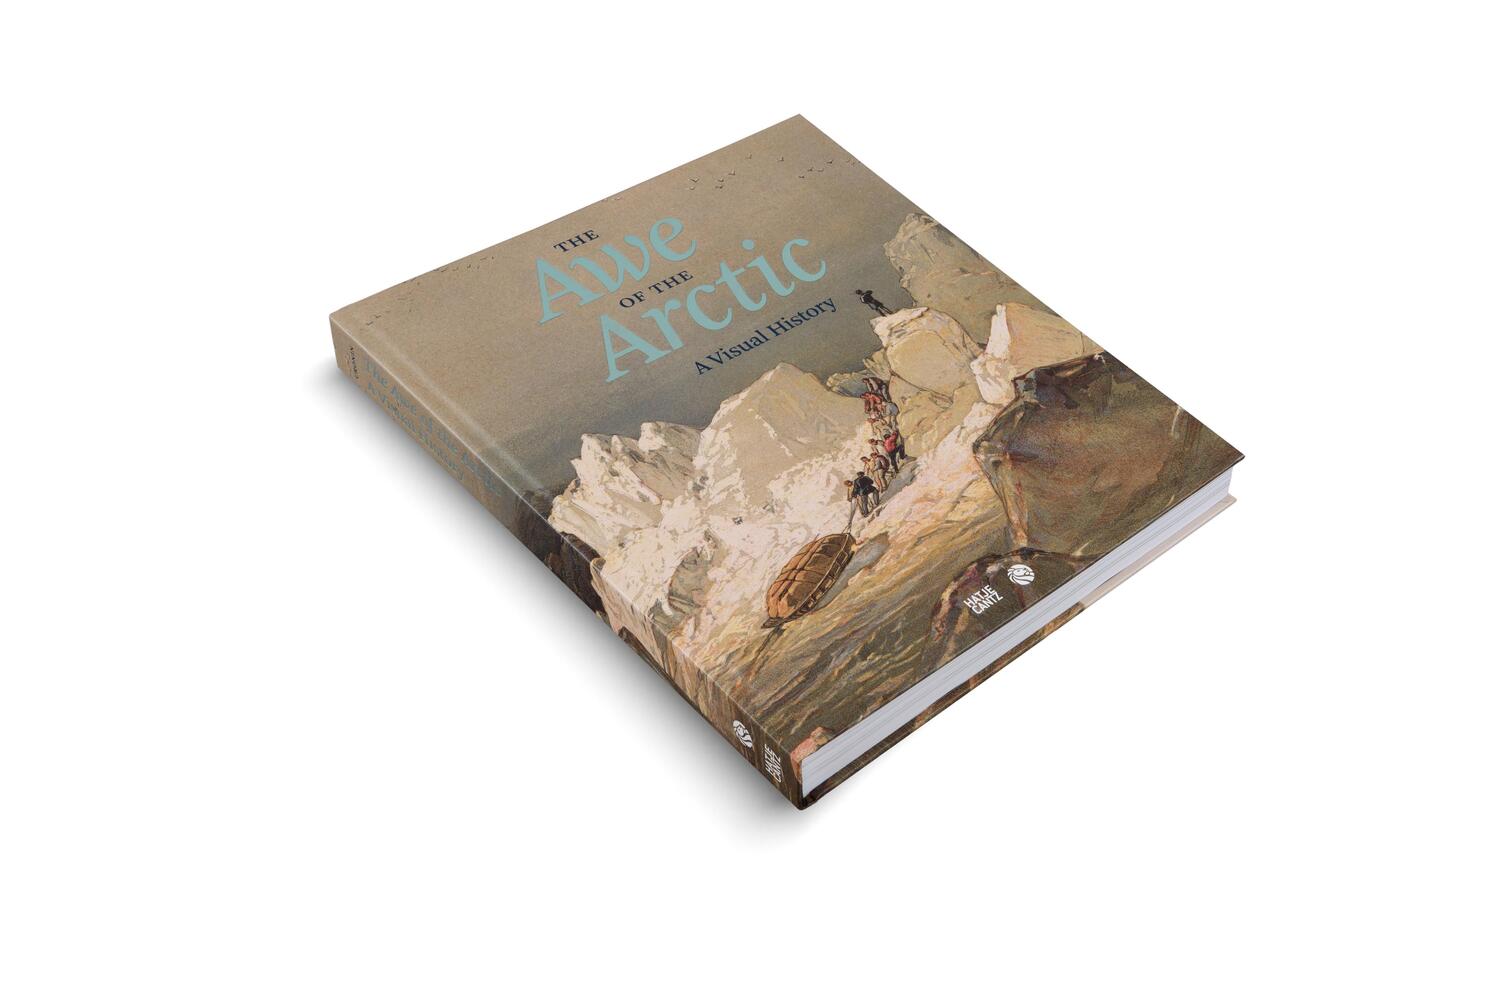 Bild: 9783775748070 | The Awe of the Arctic | A Visual History | Elizabeth Cronin | Buch